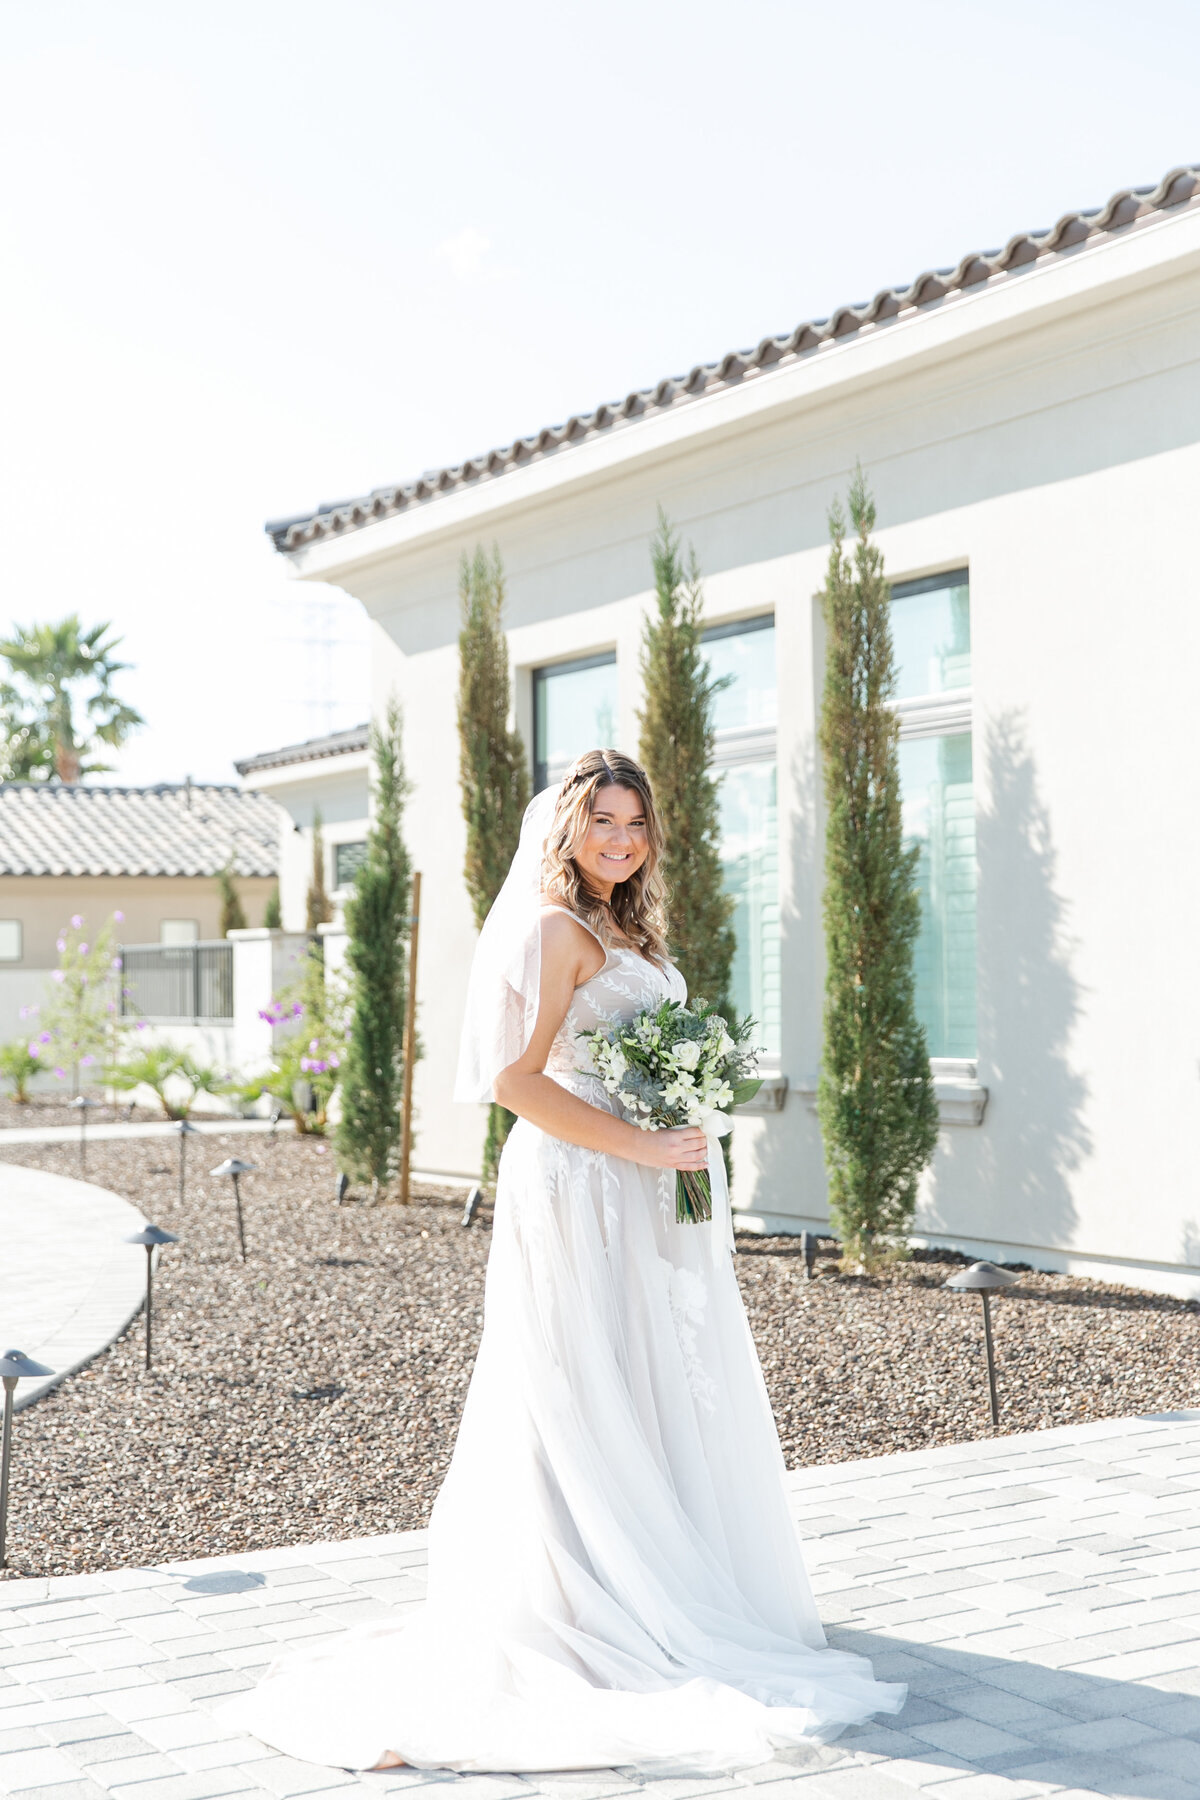 Karlie Colleen Photography - Arizona Backyard wedding - Brittney & Josh-98